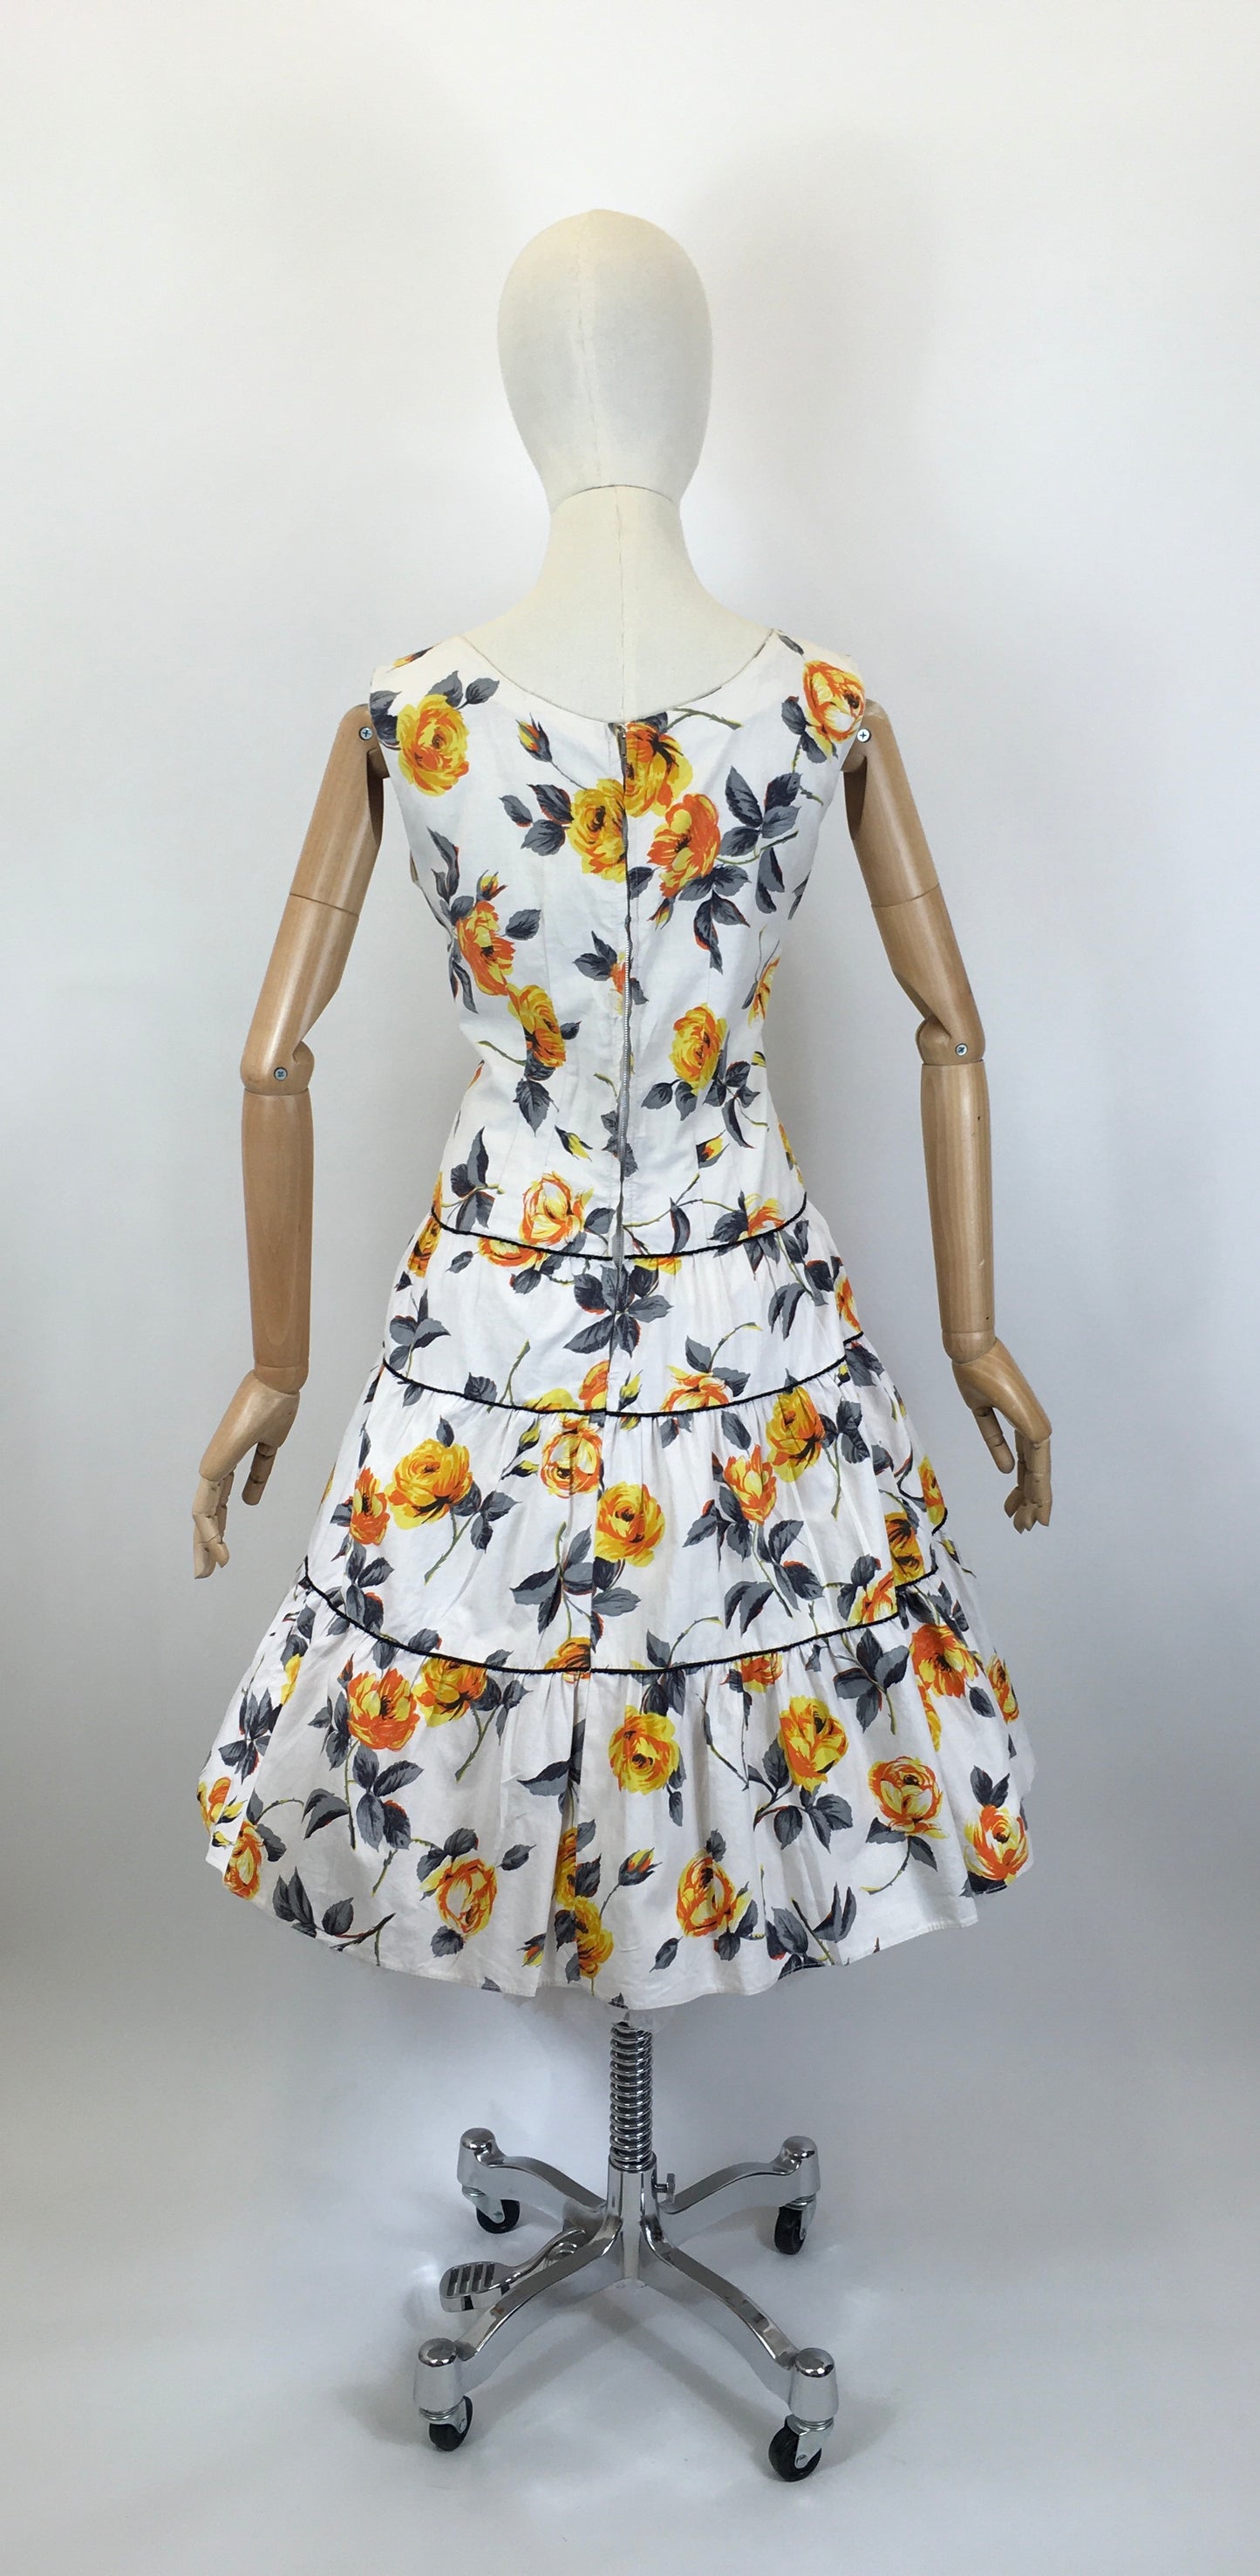 Original 1950's Darling Cotton Day Dress - In A Sunshine Yellow, Orange, Black and White